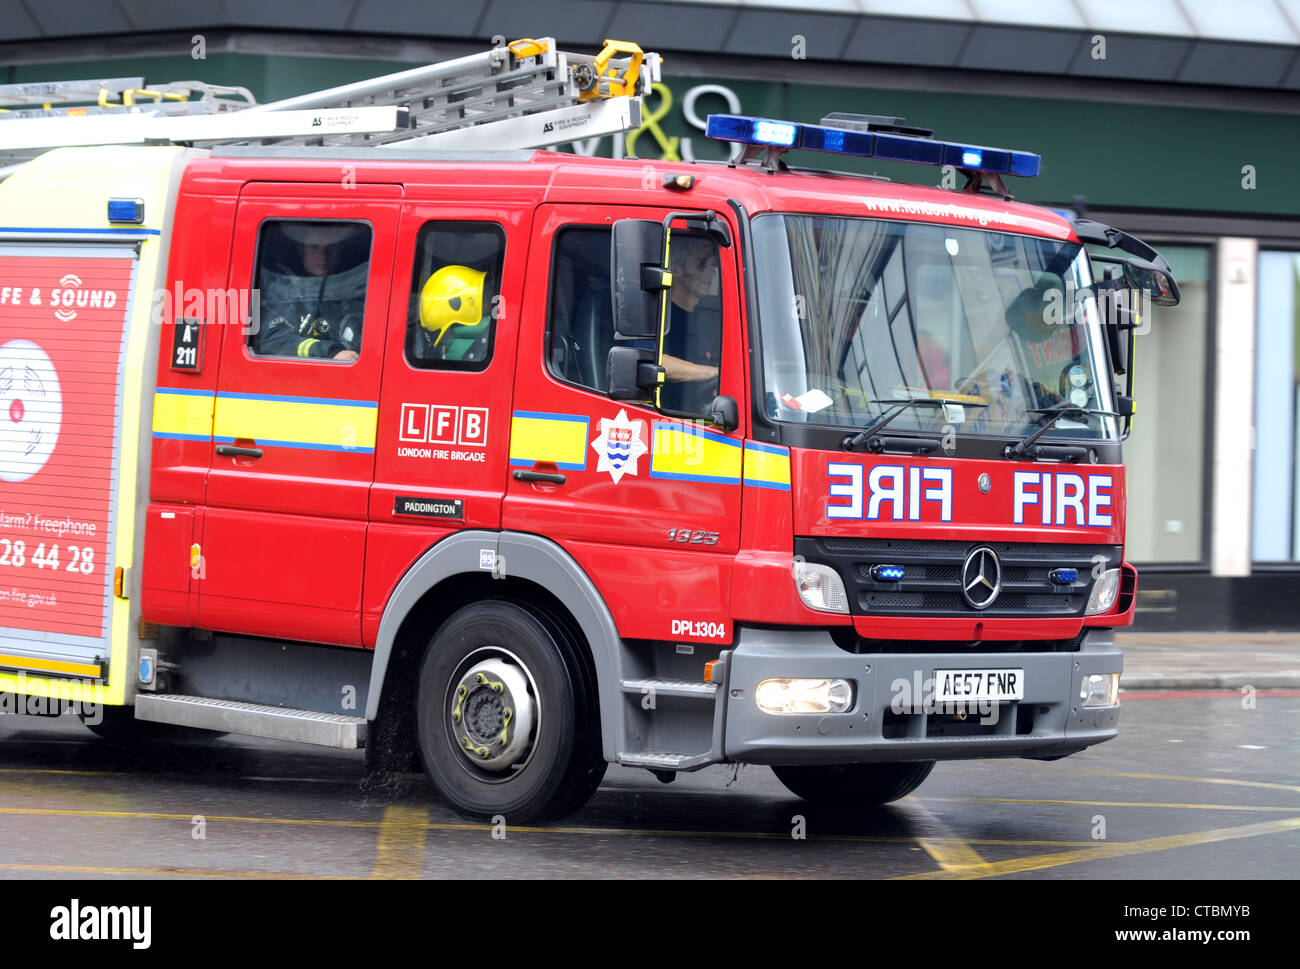 Fire engine, London Fire Brigade fire engine, London, Britain, UK Stock Photo